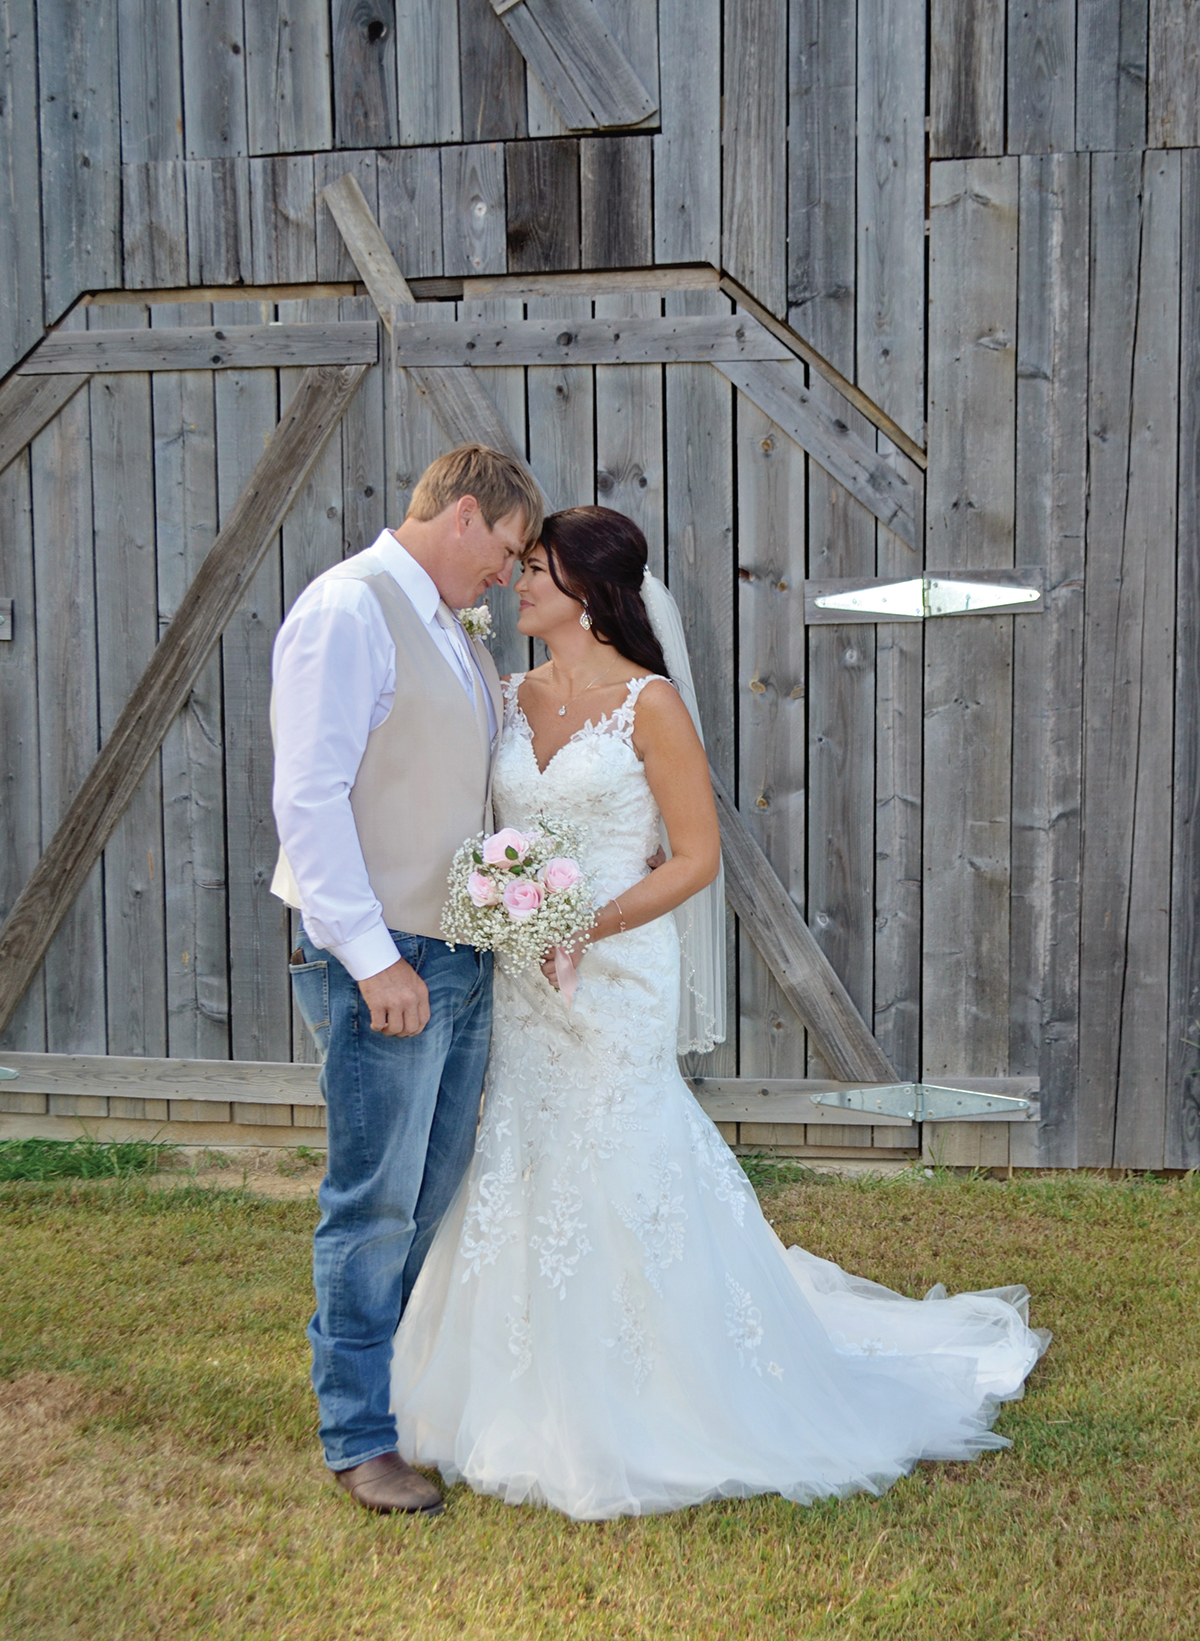 Shannon + Chris Naylor wedding couple barn